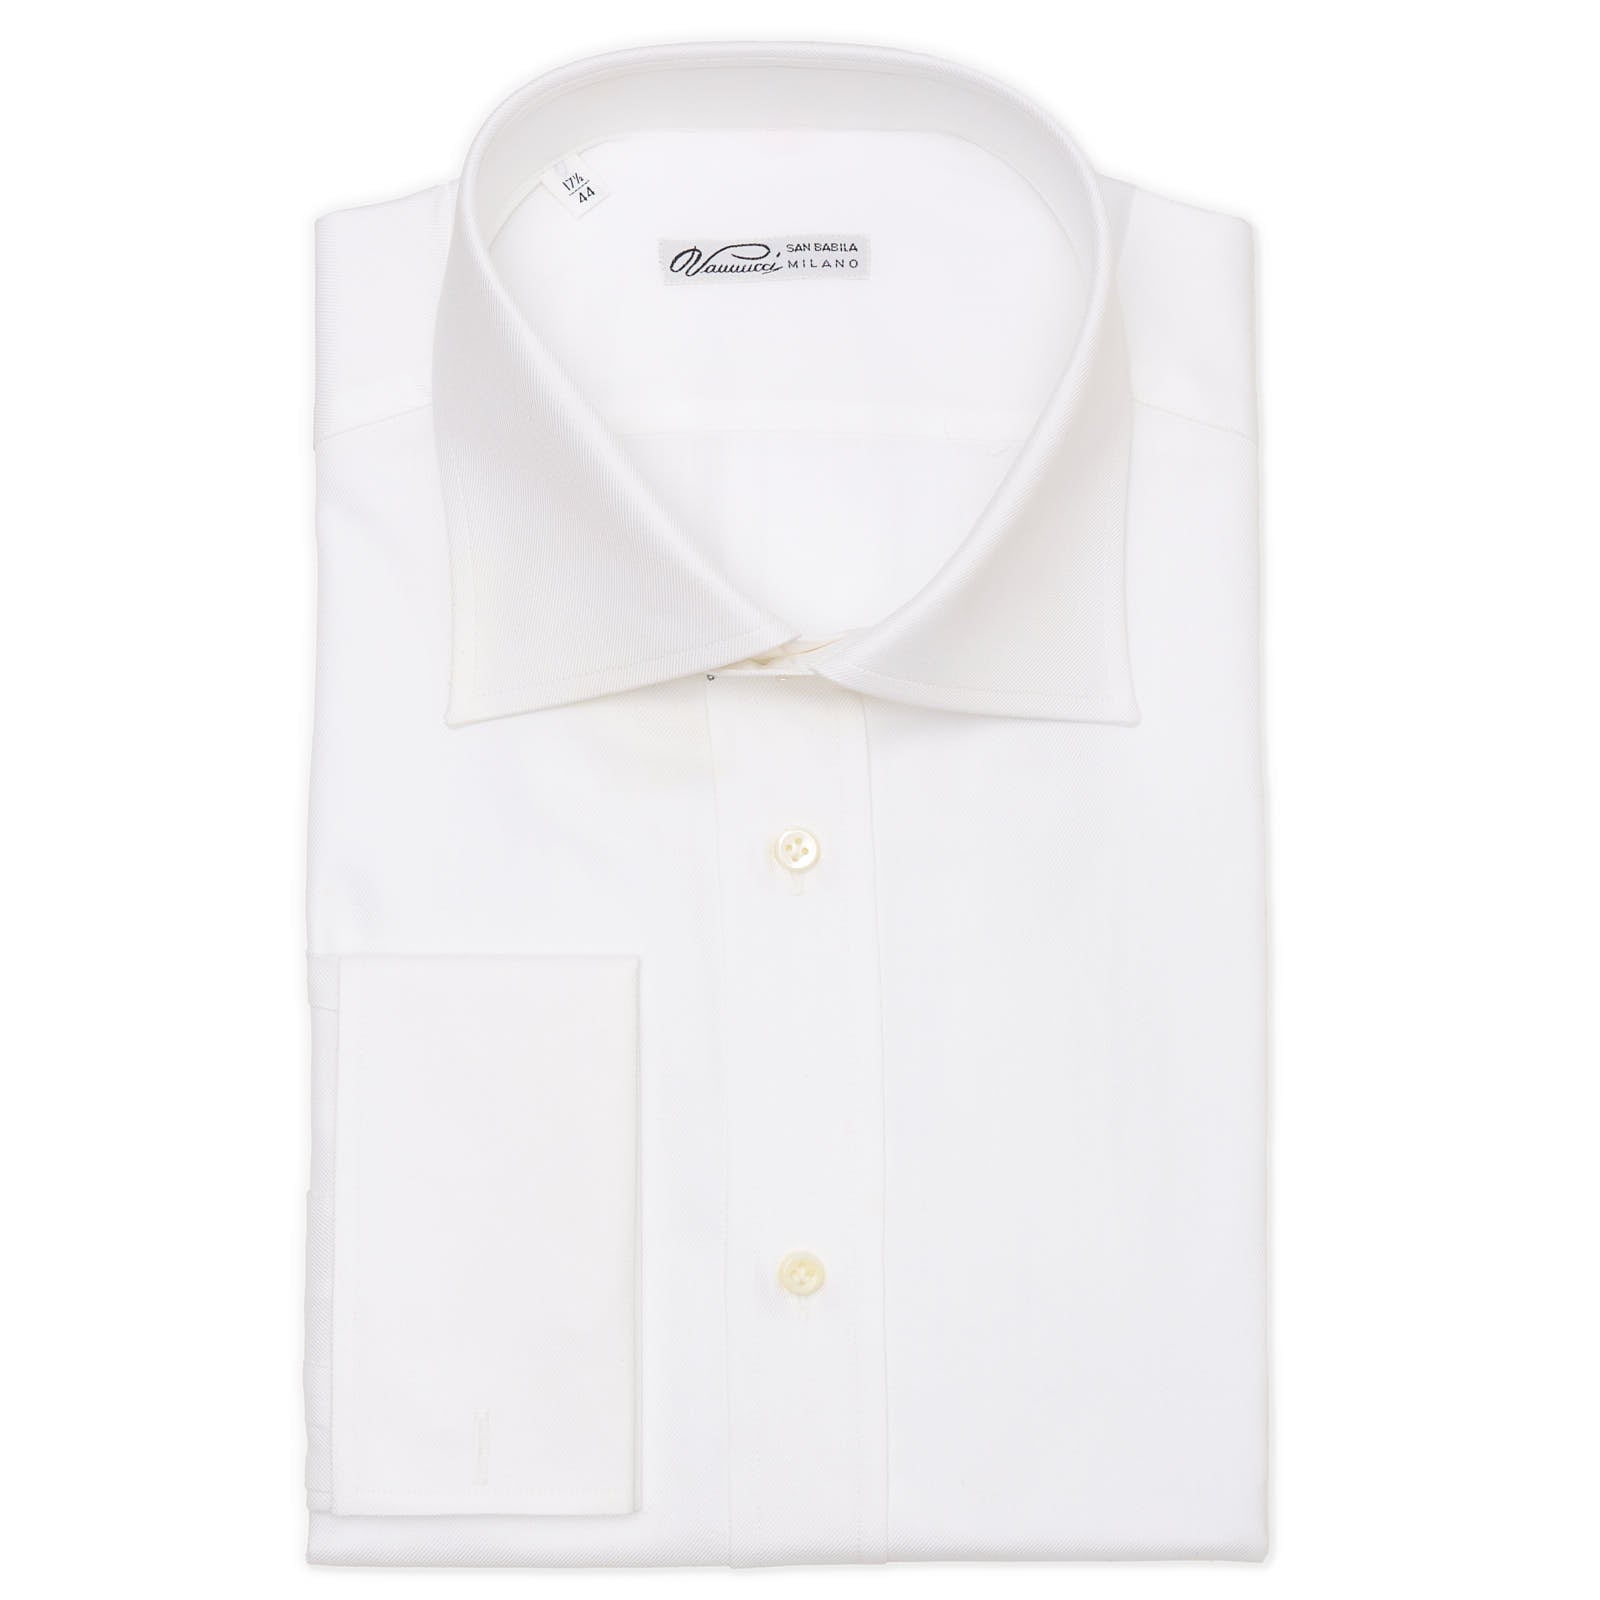 VANNUCCI Milano White Cotton French Cuff Dress Shirt EU 44 NEW US 17.5